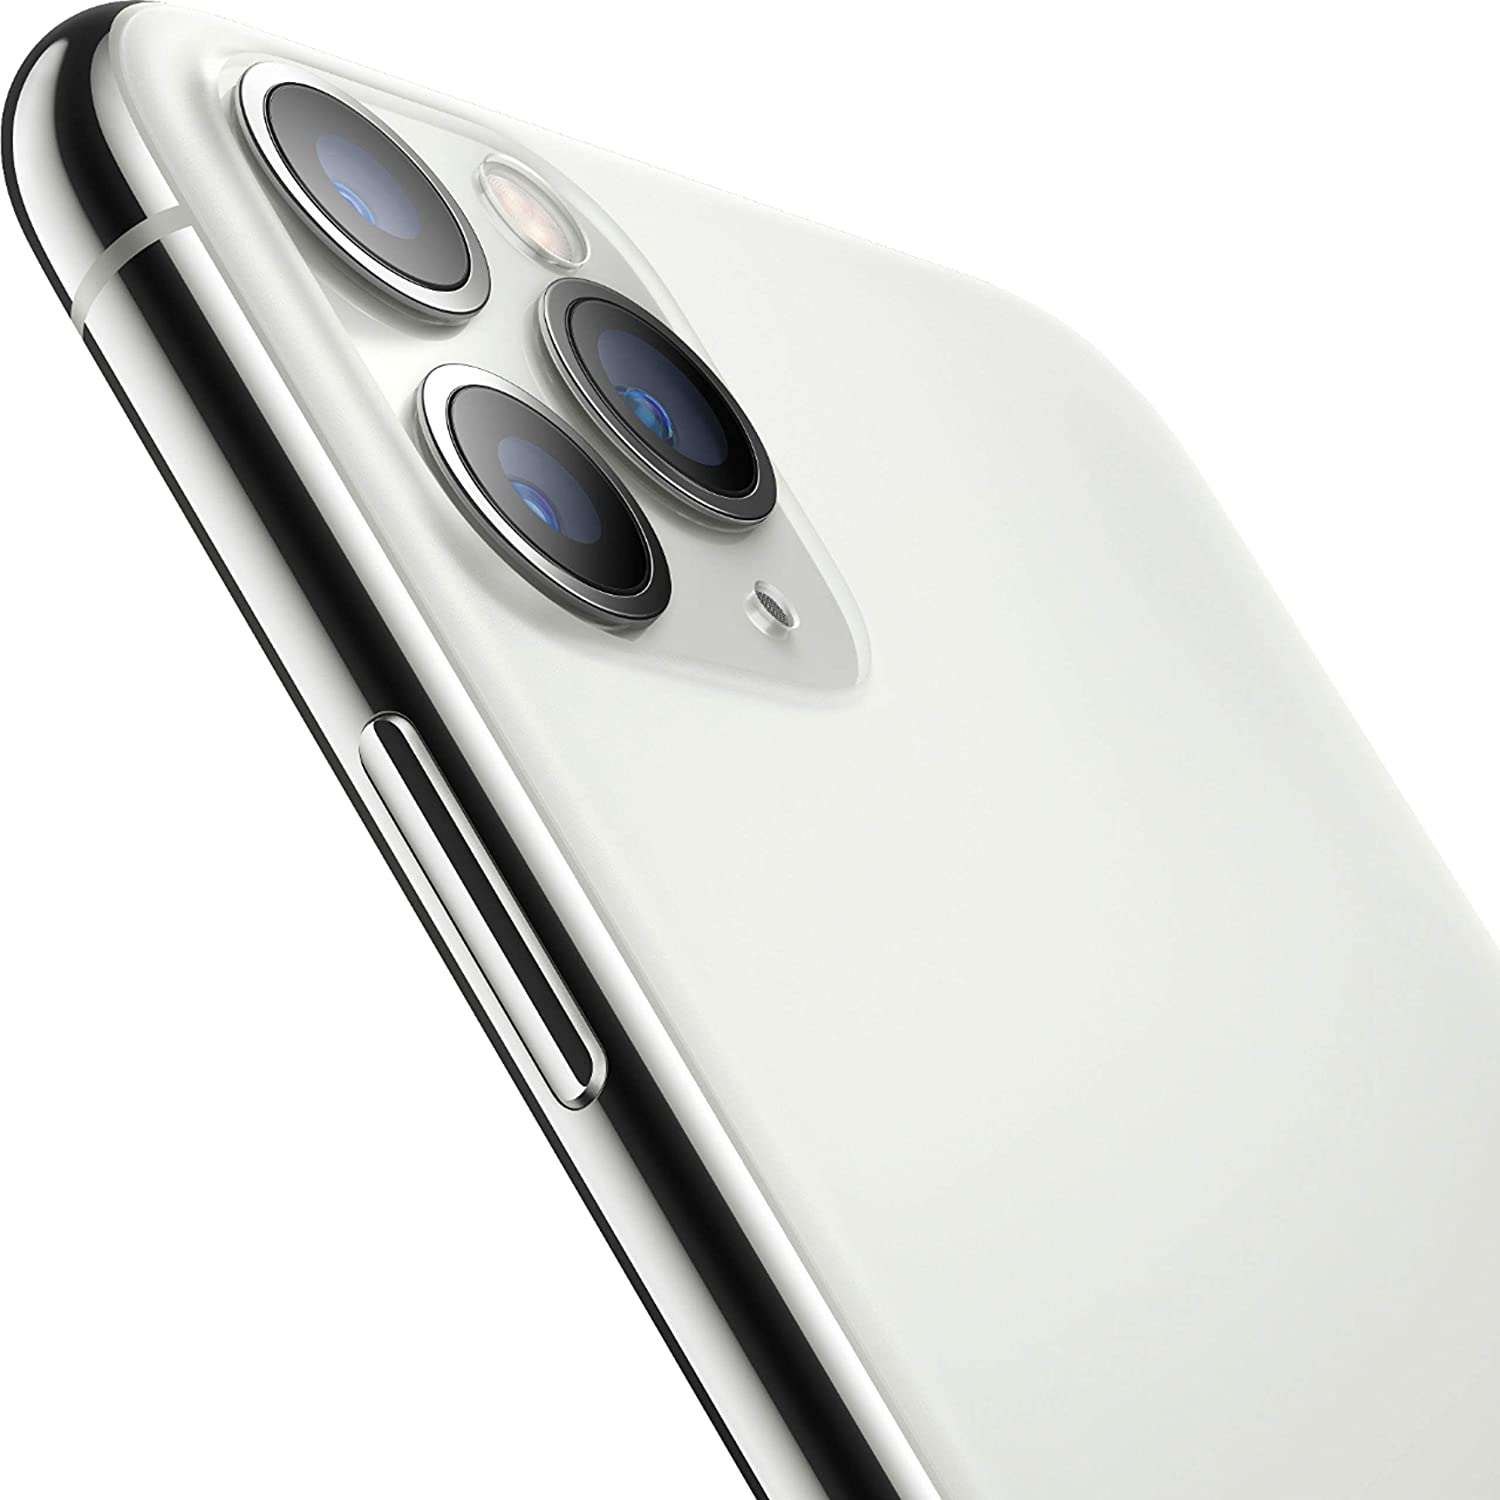 Apple iPhone 11 Pro Max 256GB (Unlocked) Silver